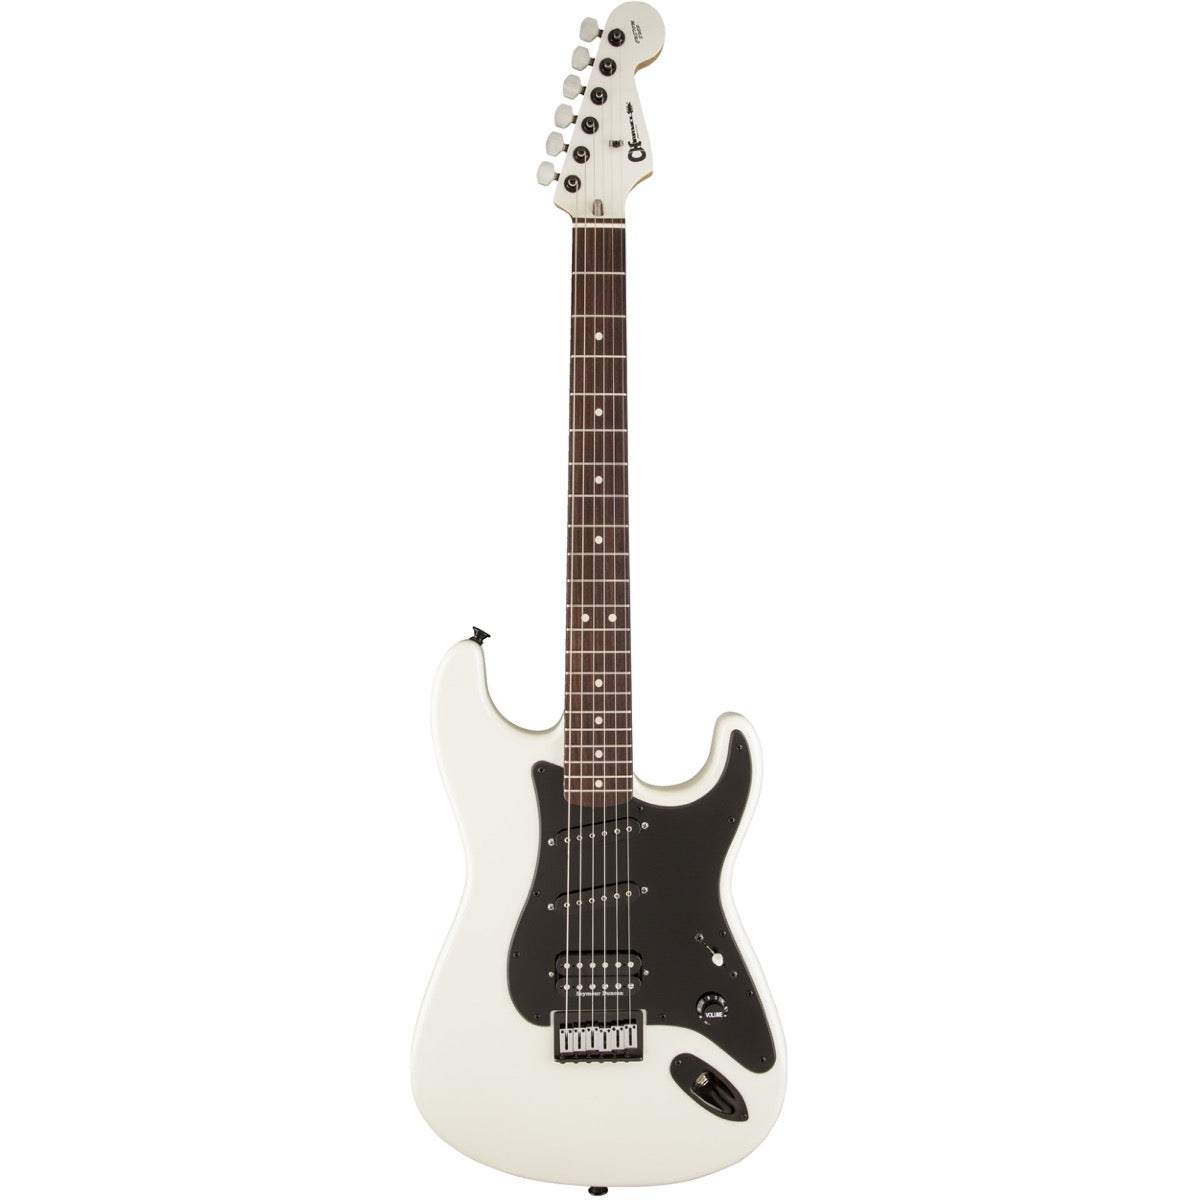 Charvel USA Jake E Lee Signature Electric Guitar in Pearl White